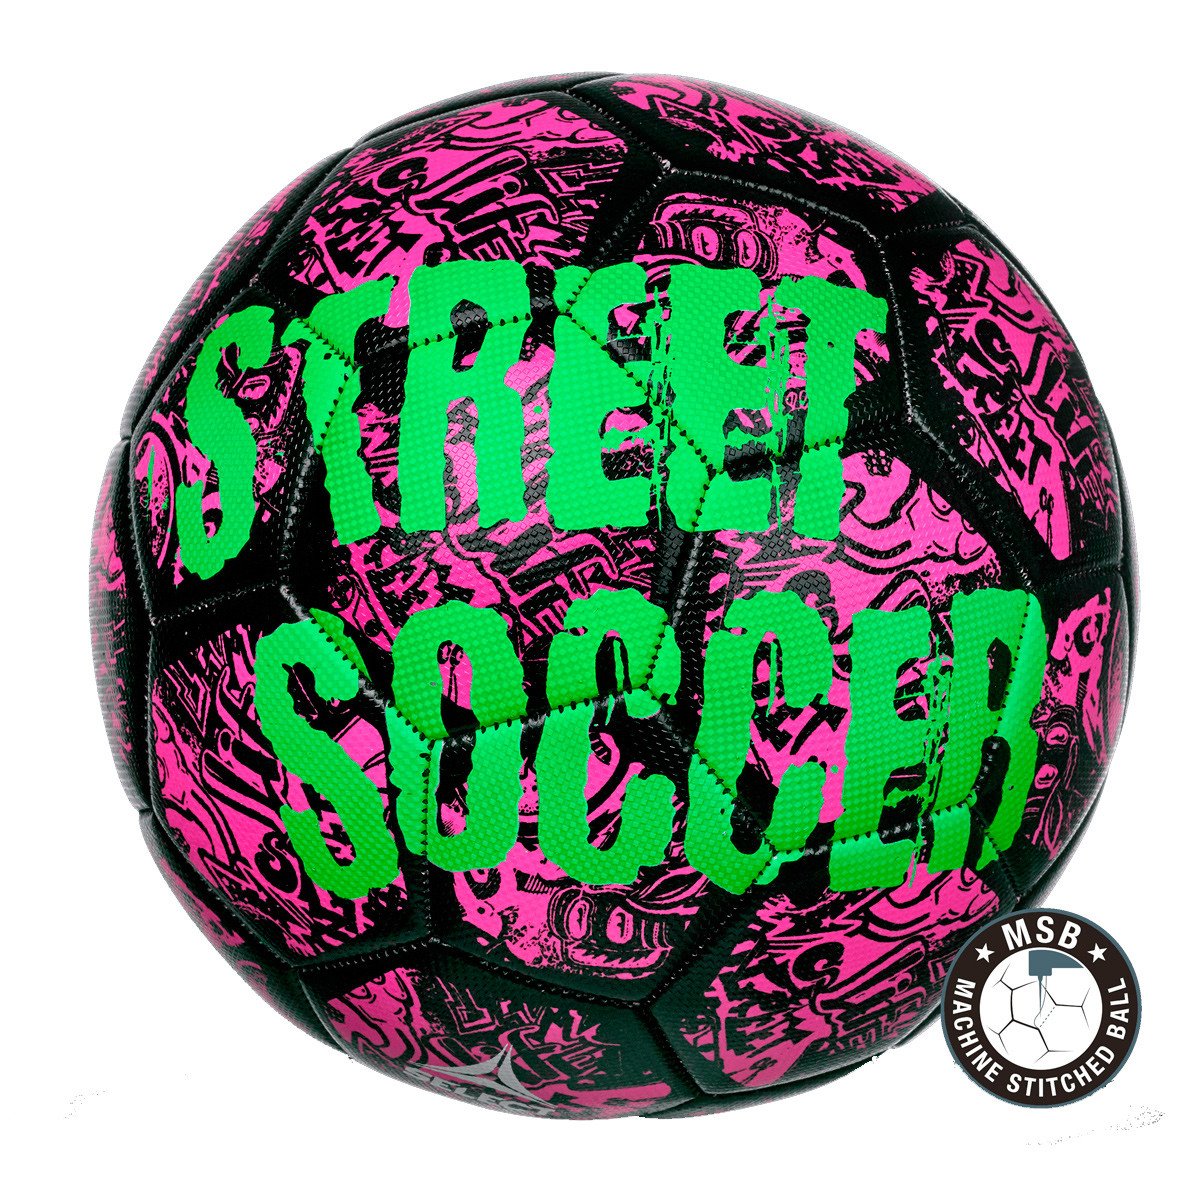 Select Street Soccer v22 Fodbold 